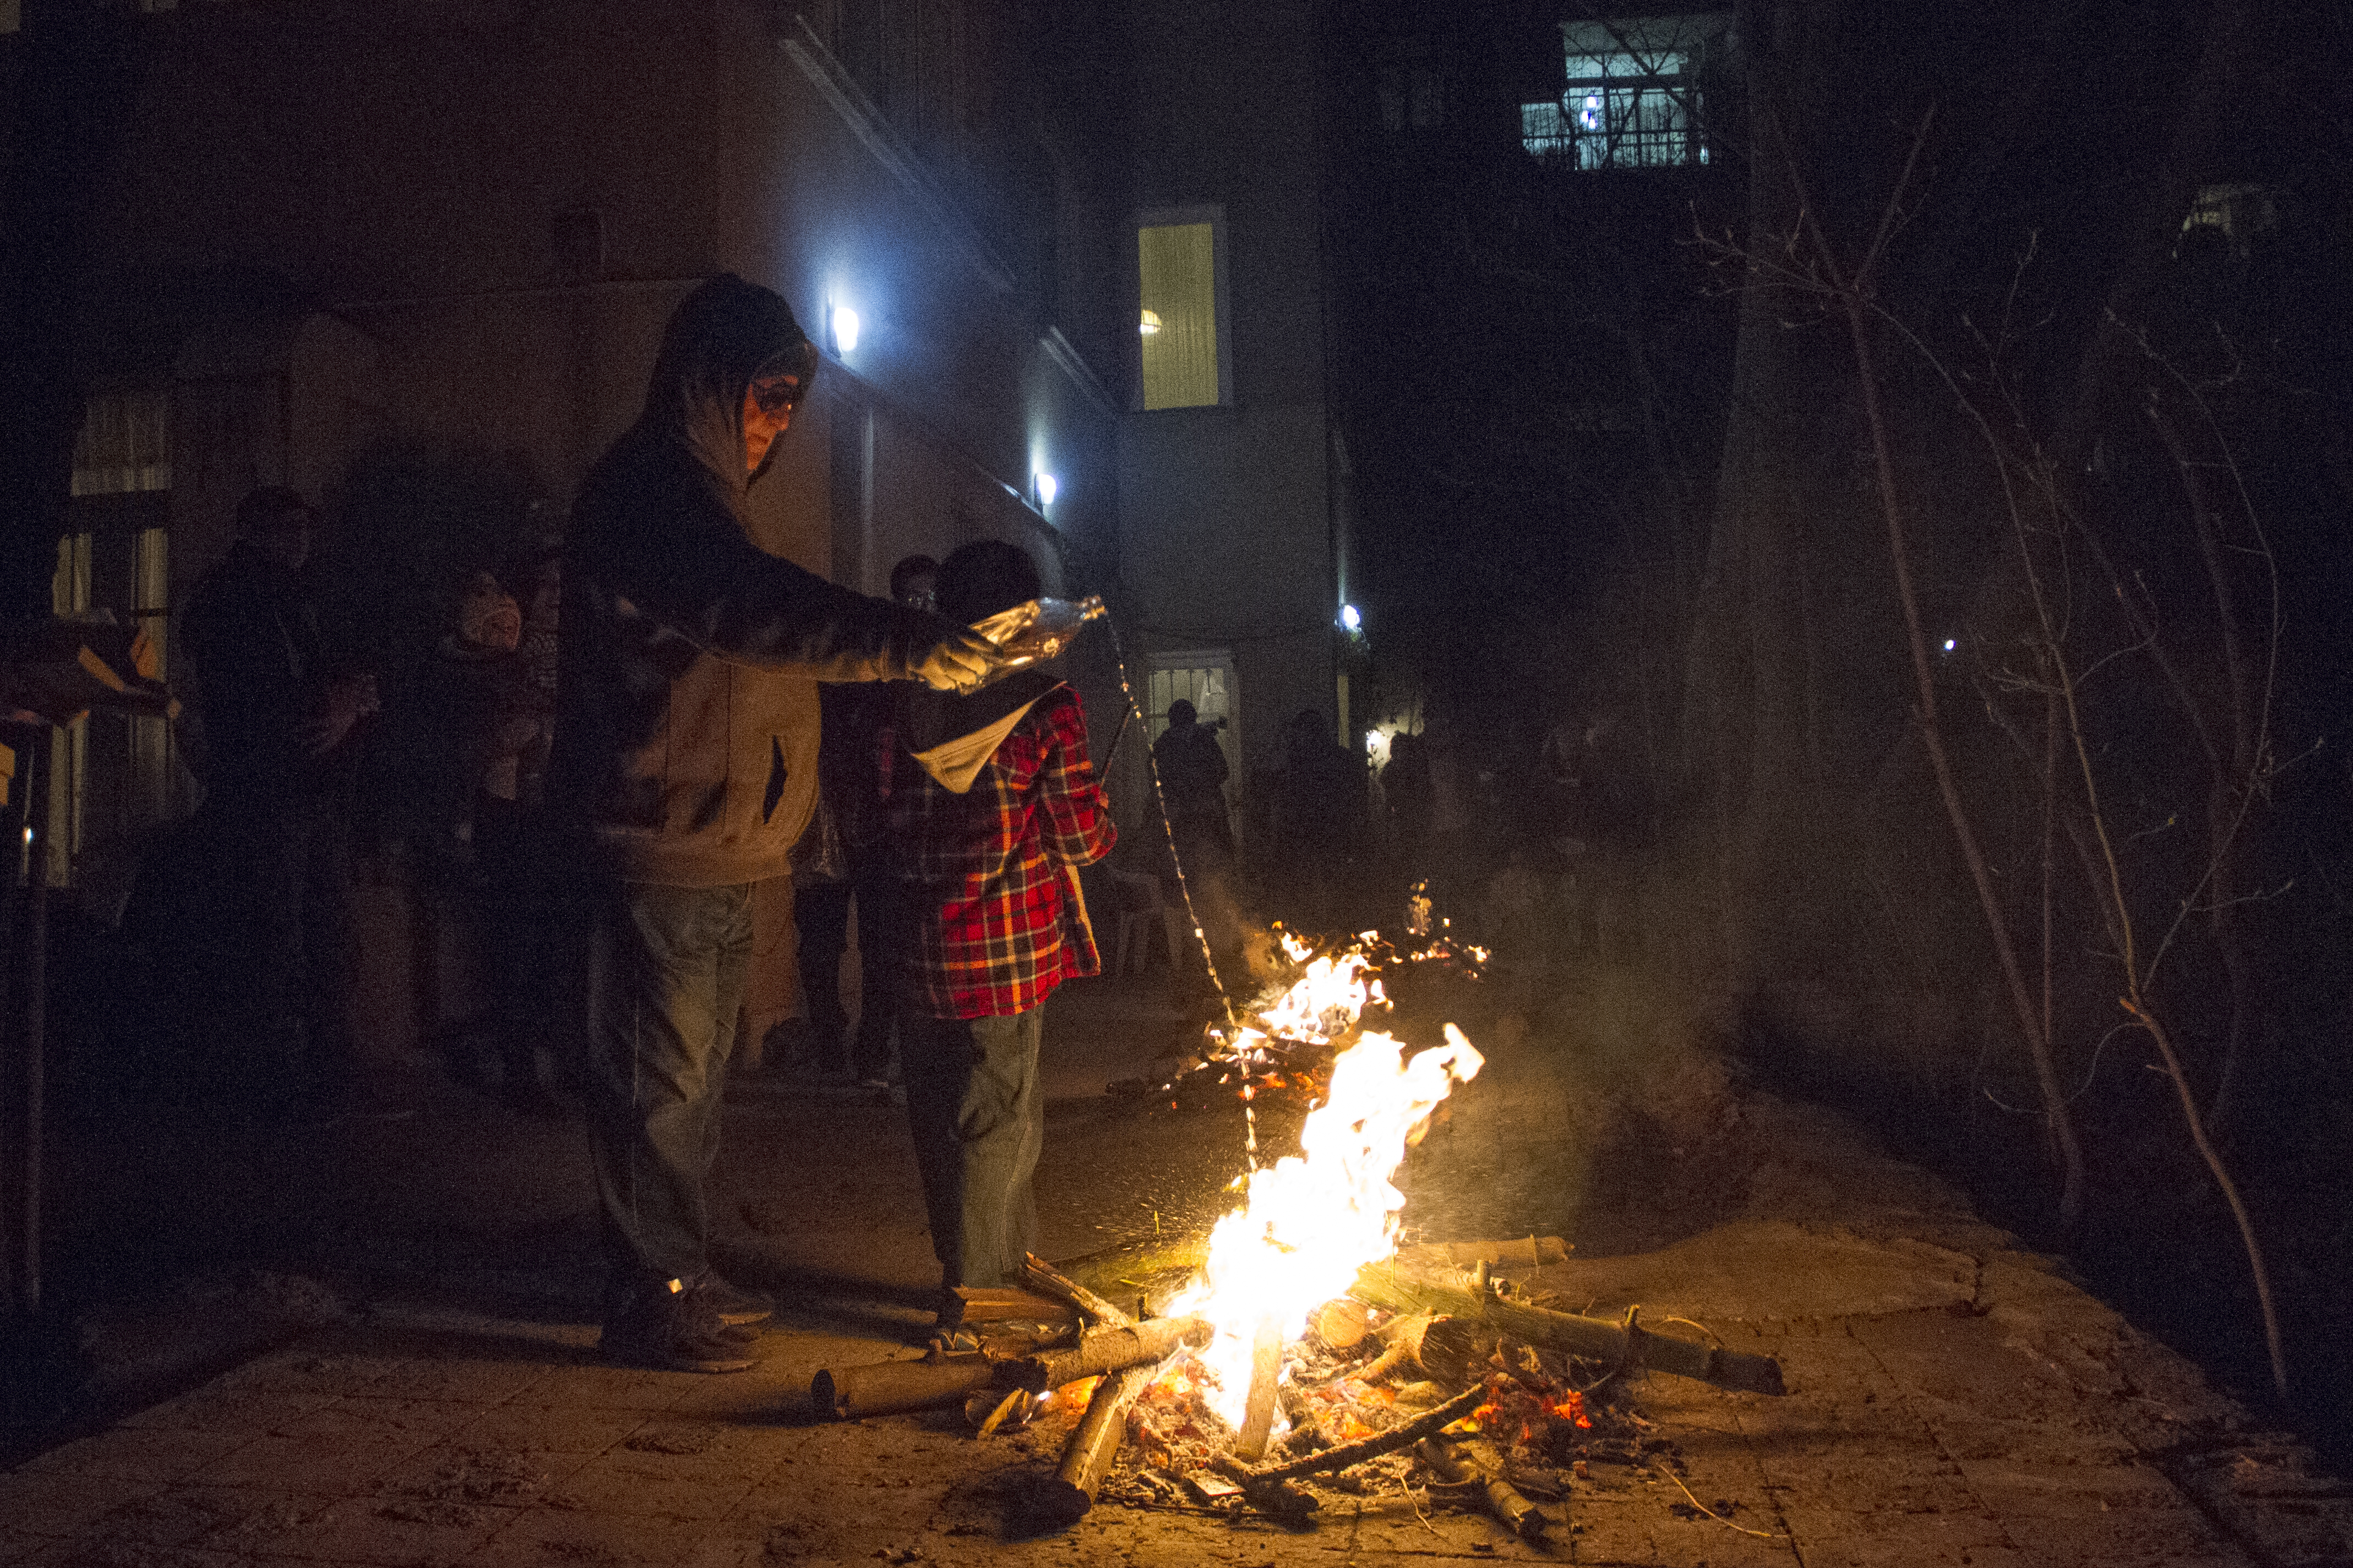 Bonfires in the street on Charshanbeh Suri (photo: Changiz M. Varzi)